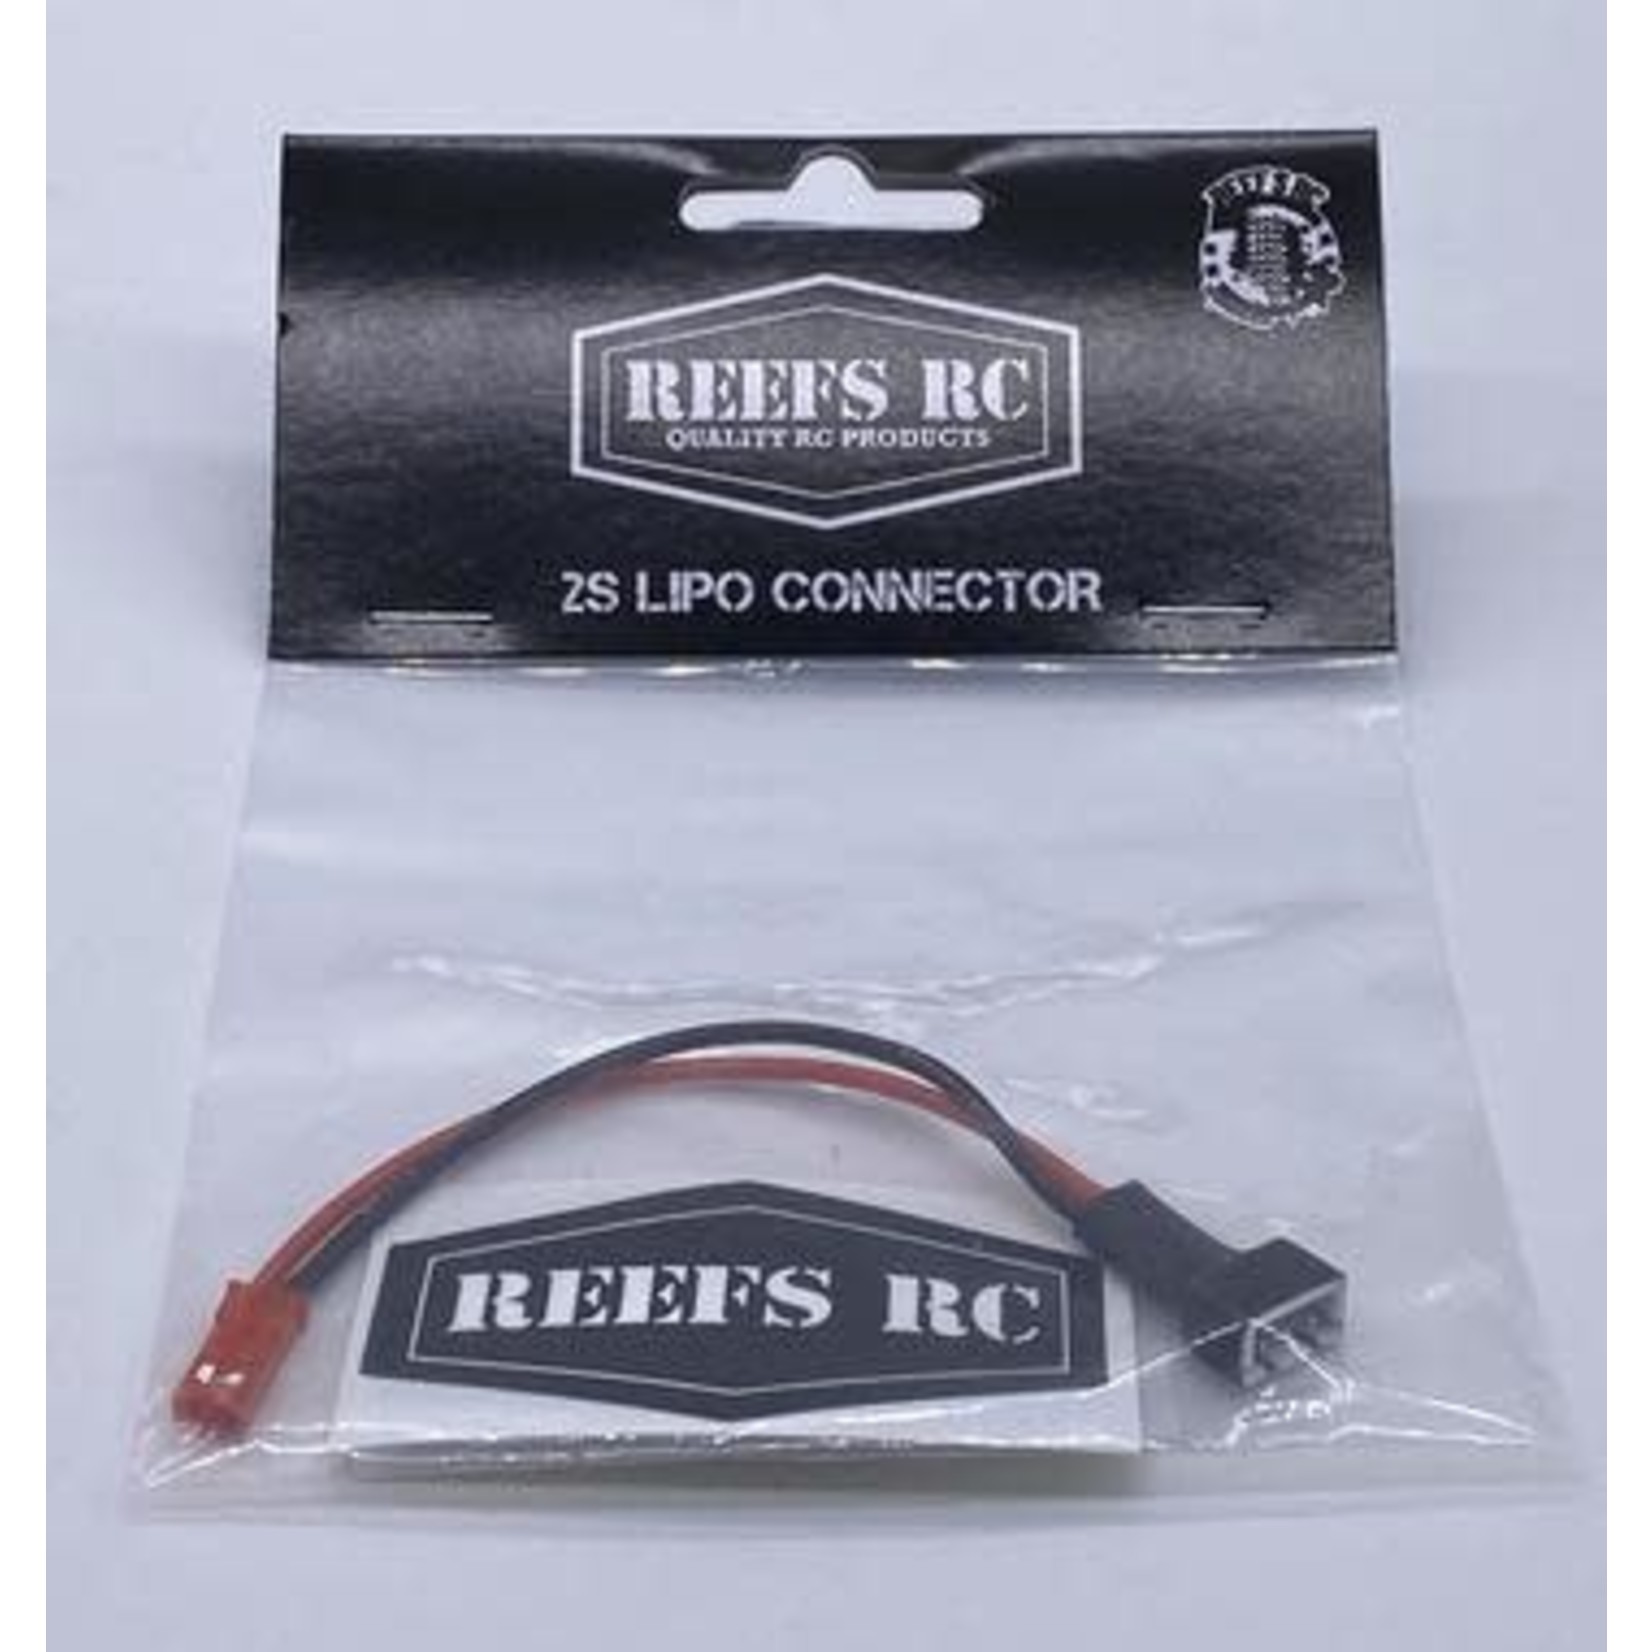 Reefs RC Reefs RC - 2S LiPo Connector #REEFS61